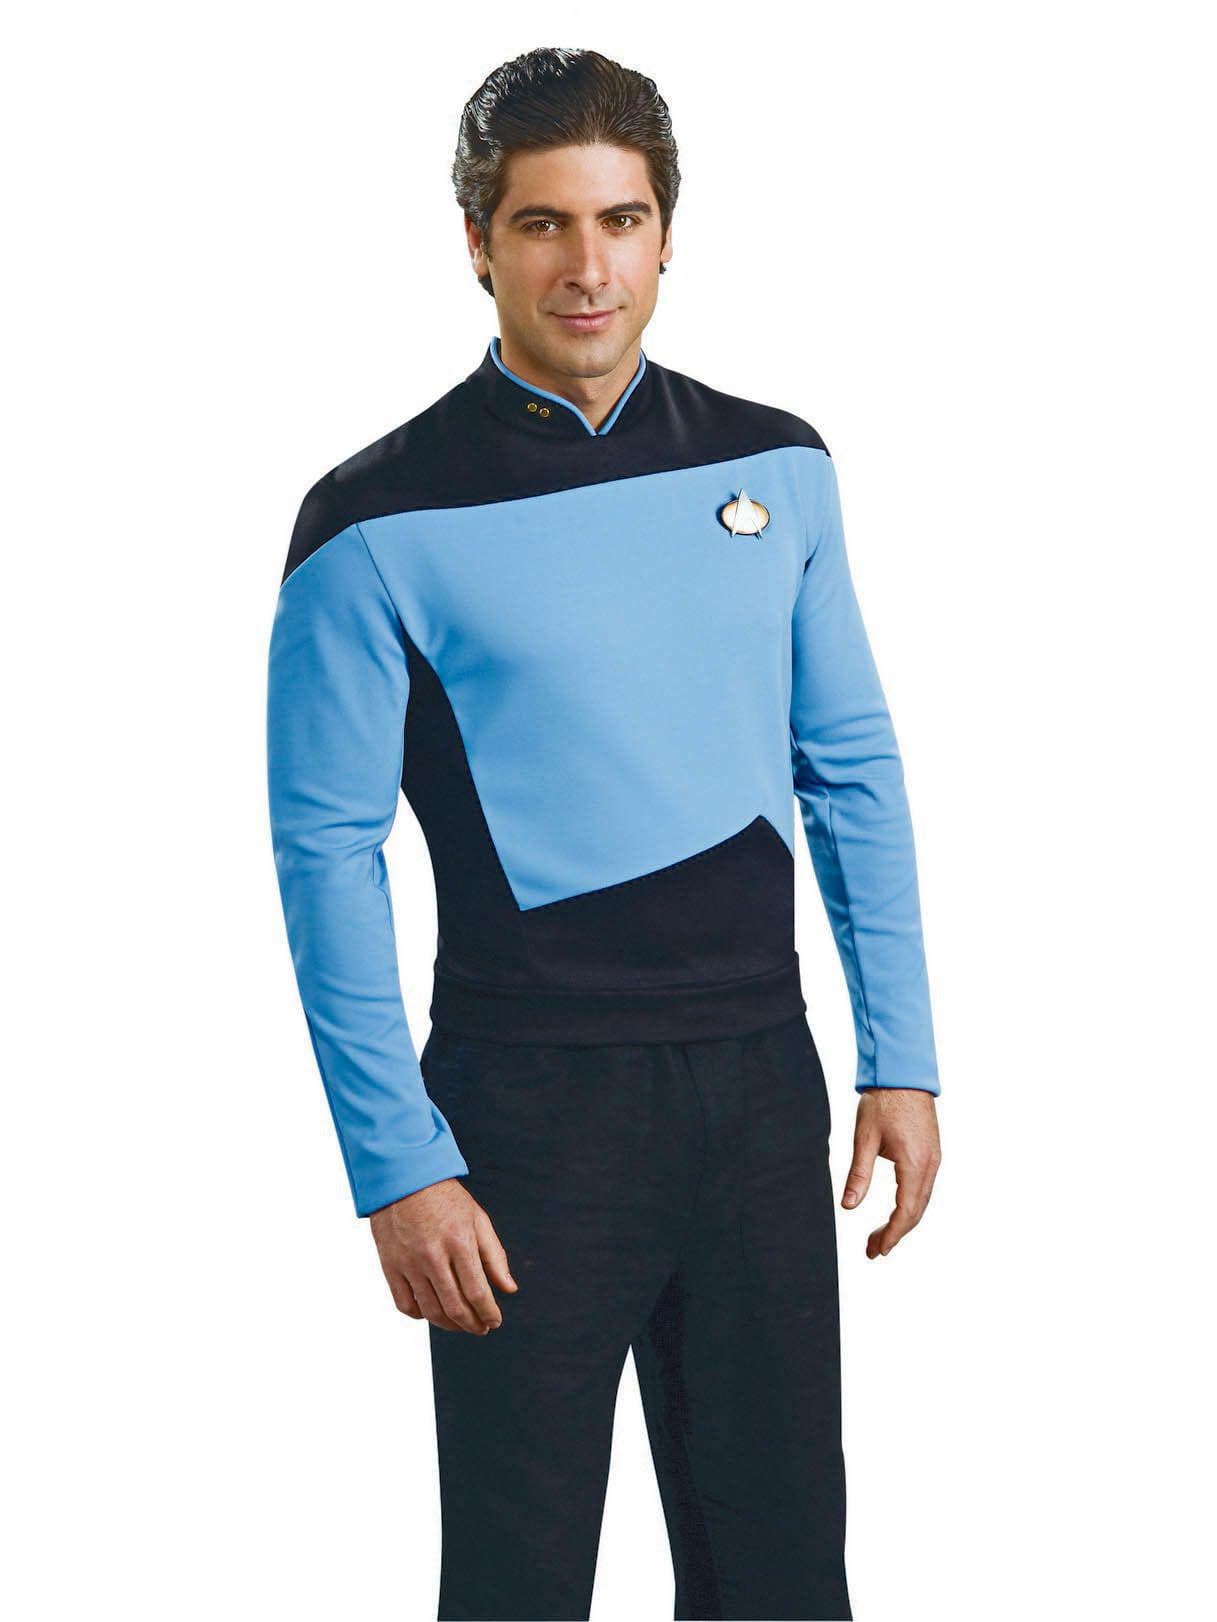 Trek: The Generation Men's Deluxe Science Uniform Paramount Shop